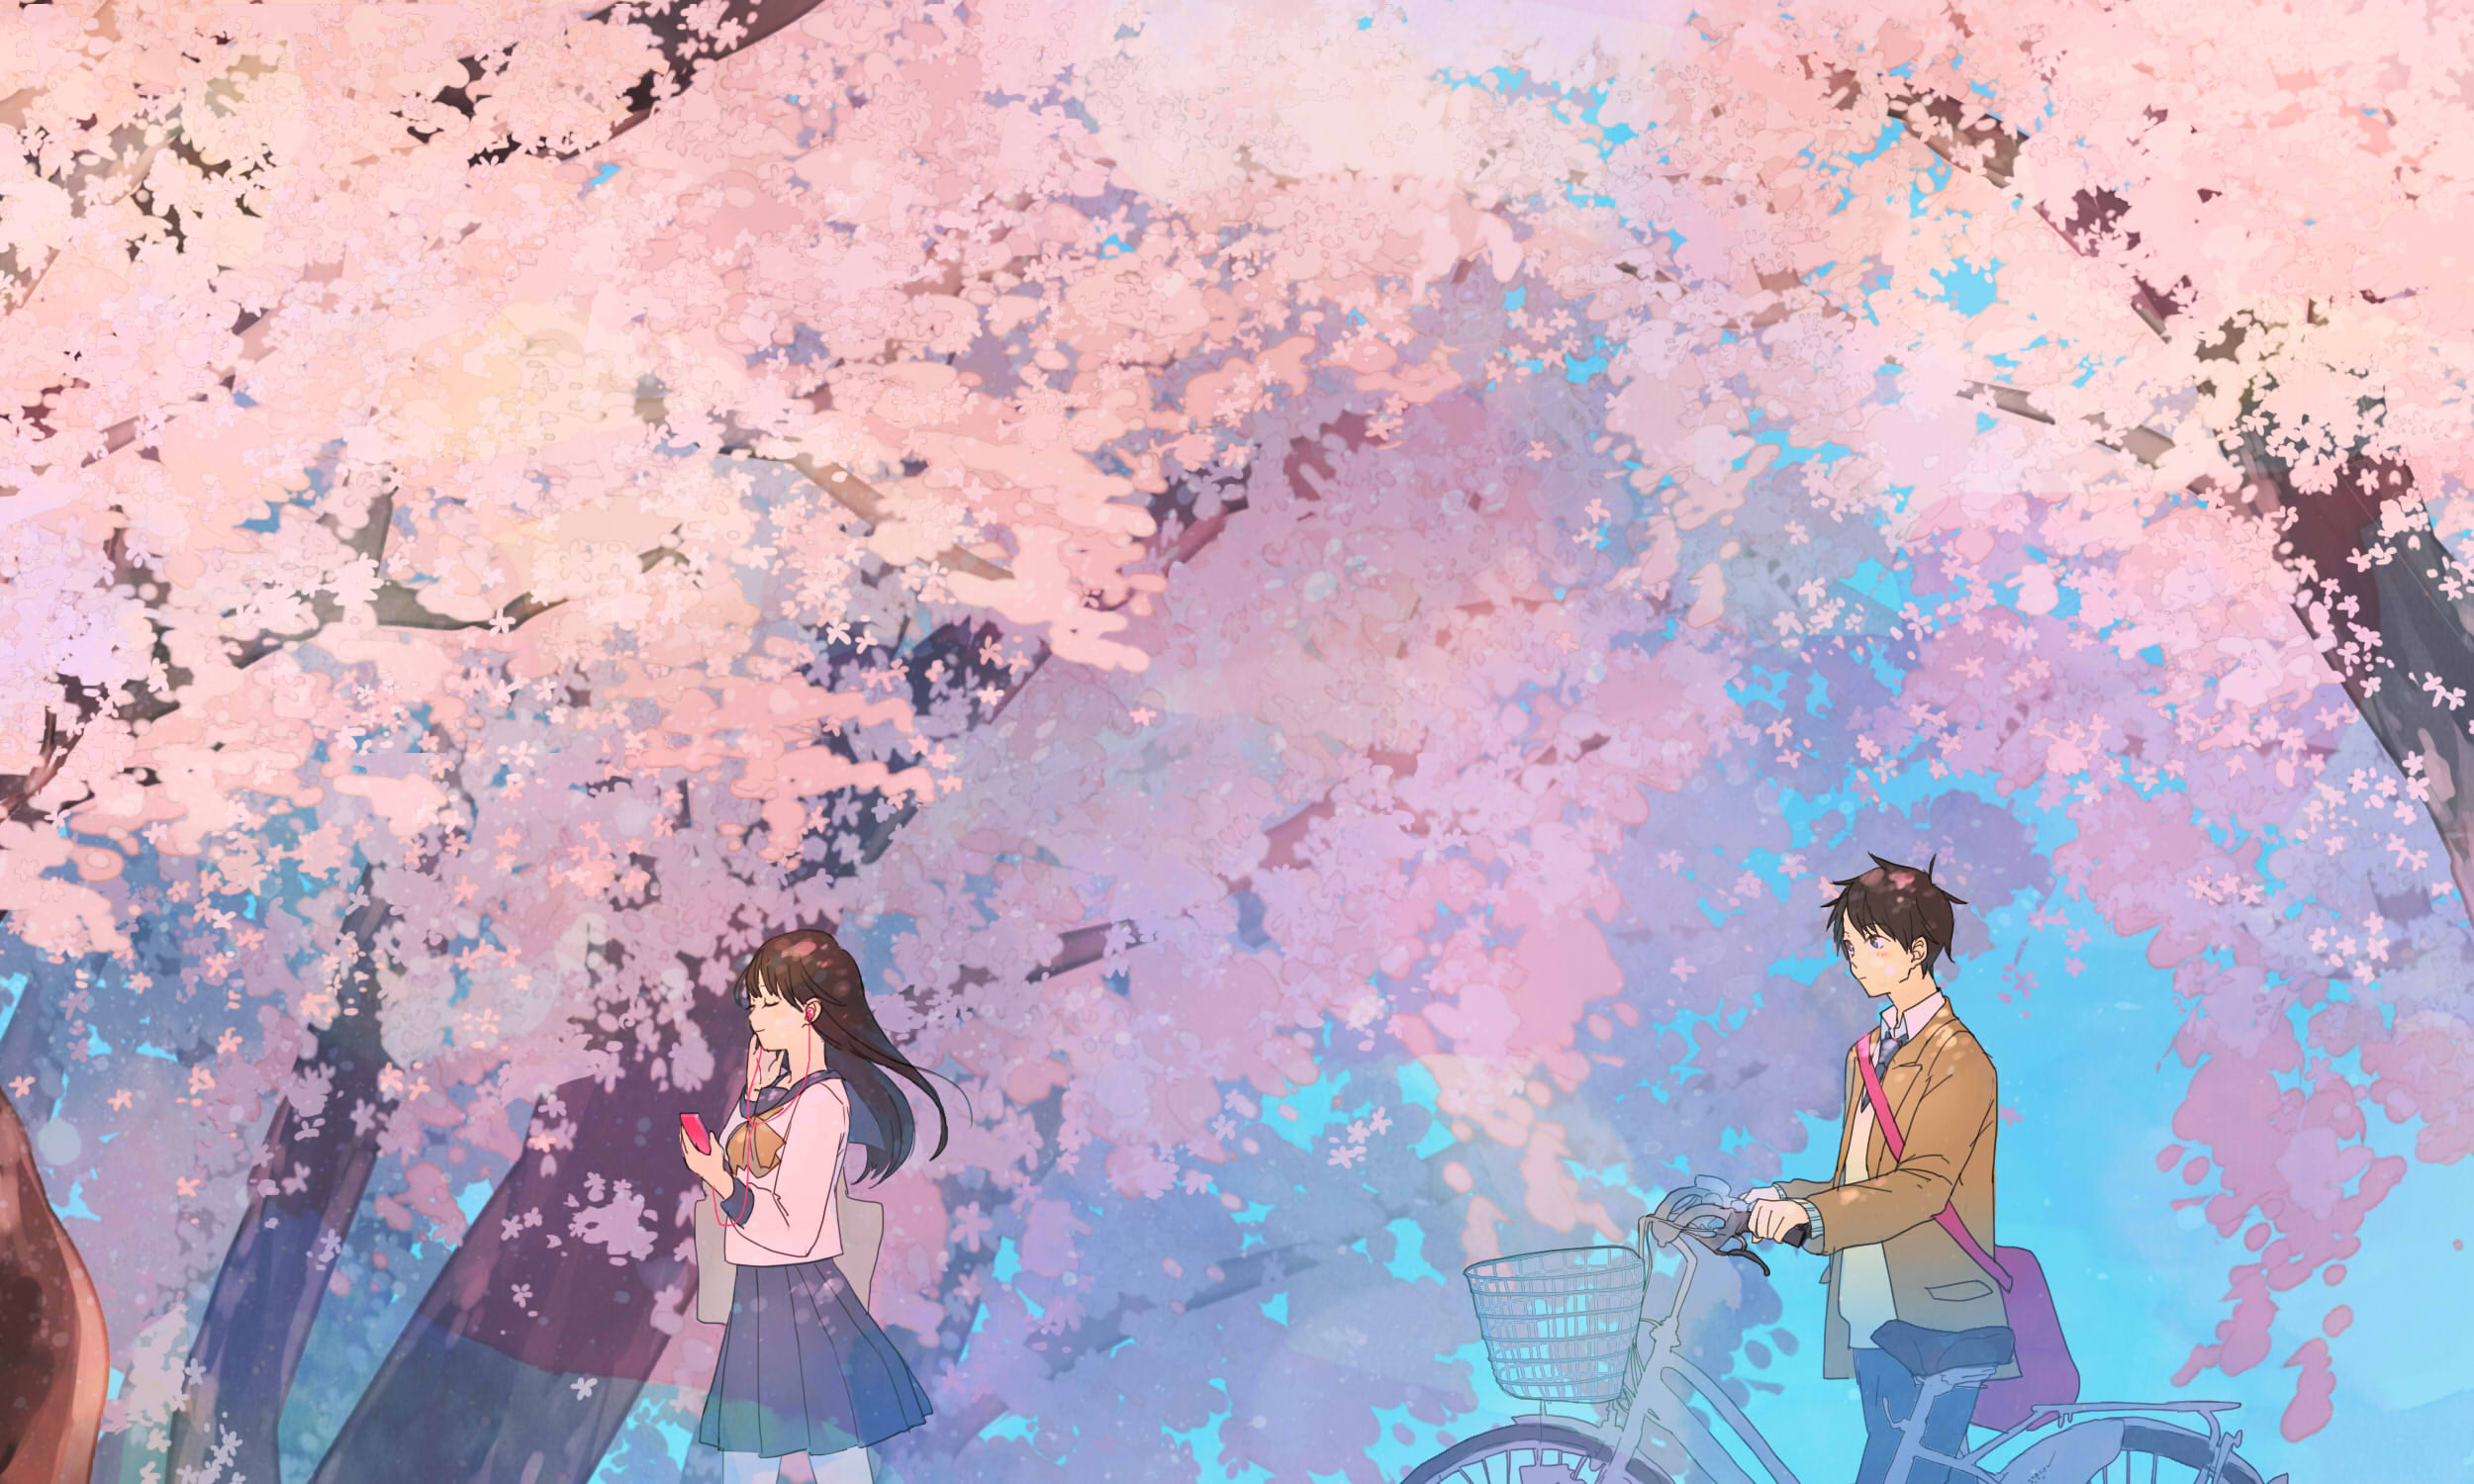 Anime 2500x1500 cherry blossom nature spring sailor uniform school uniform bicycle earphones blushing trees anime